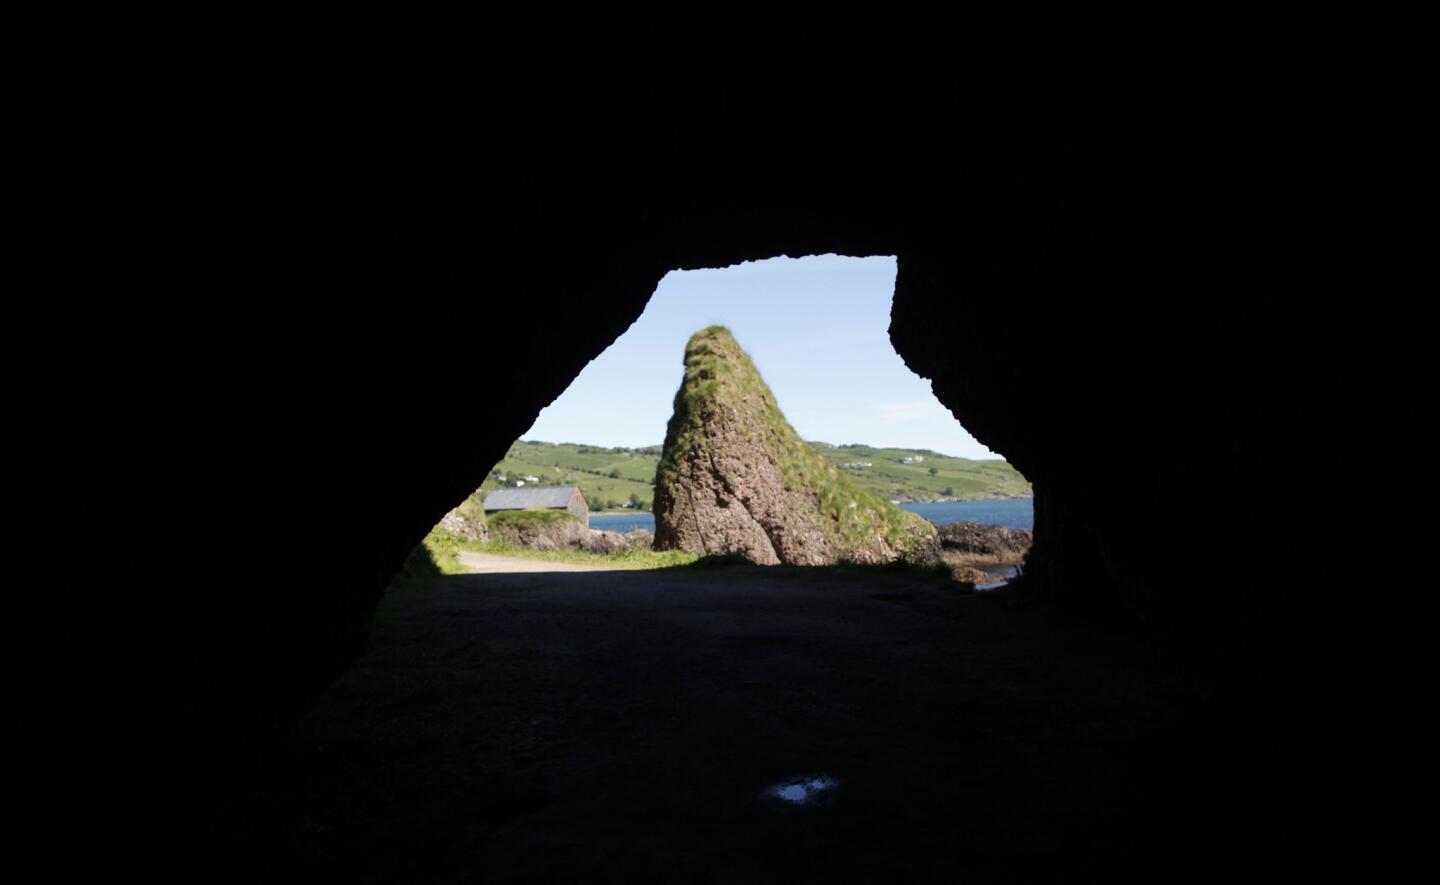 Melisandre's birthing cave